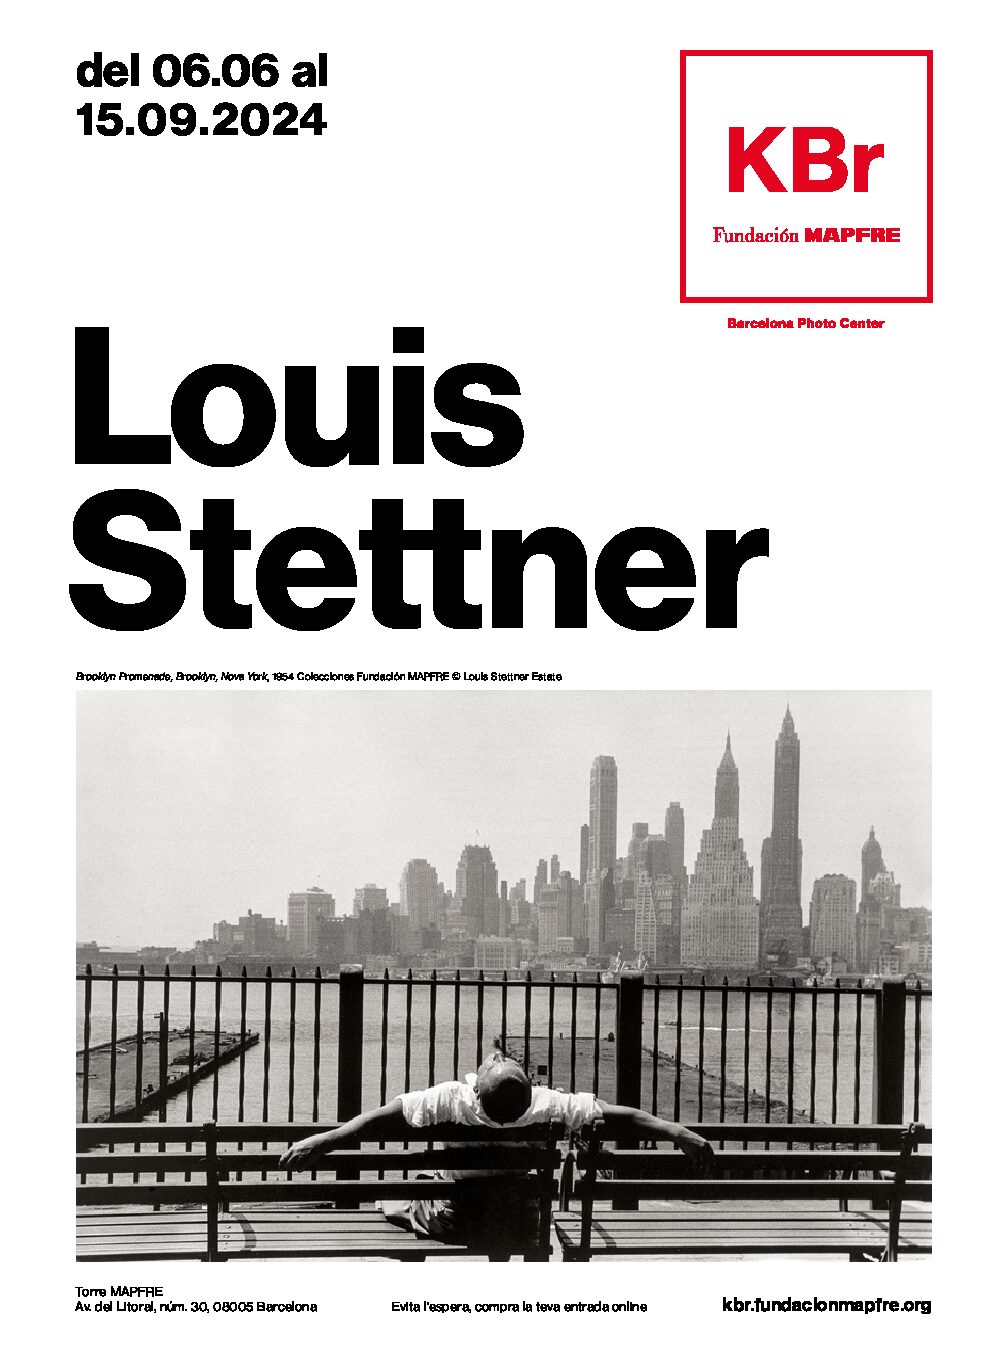 Louis Stettner retrospective Fundación MAPFRE travels to Barcelona